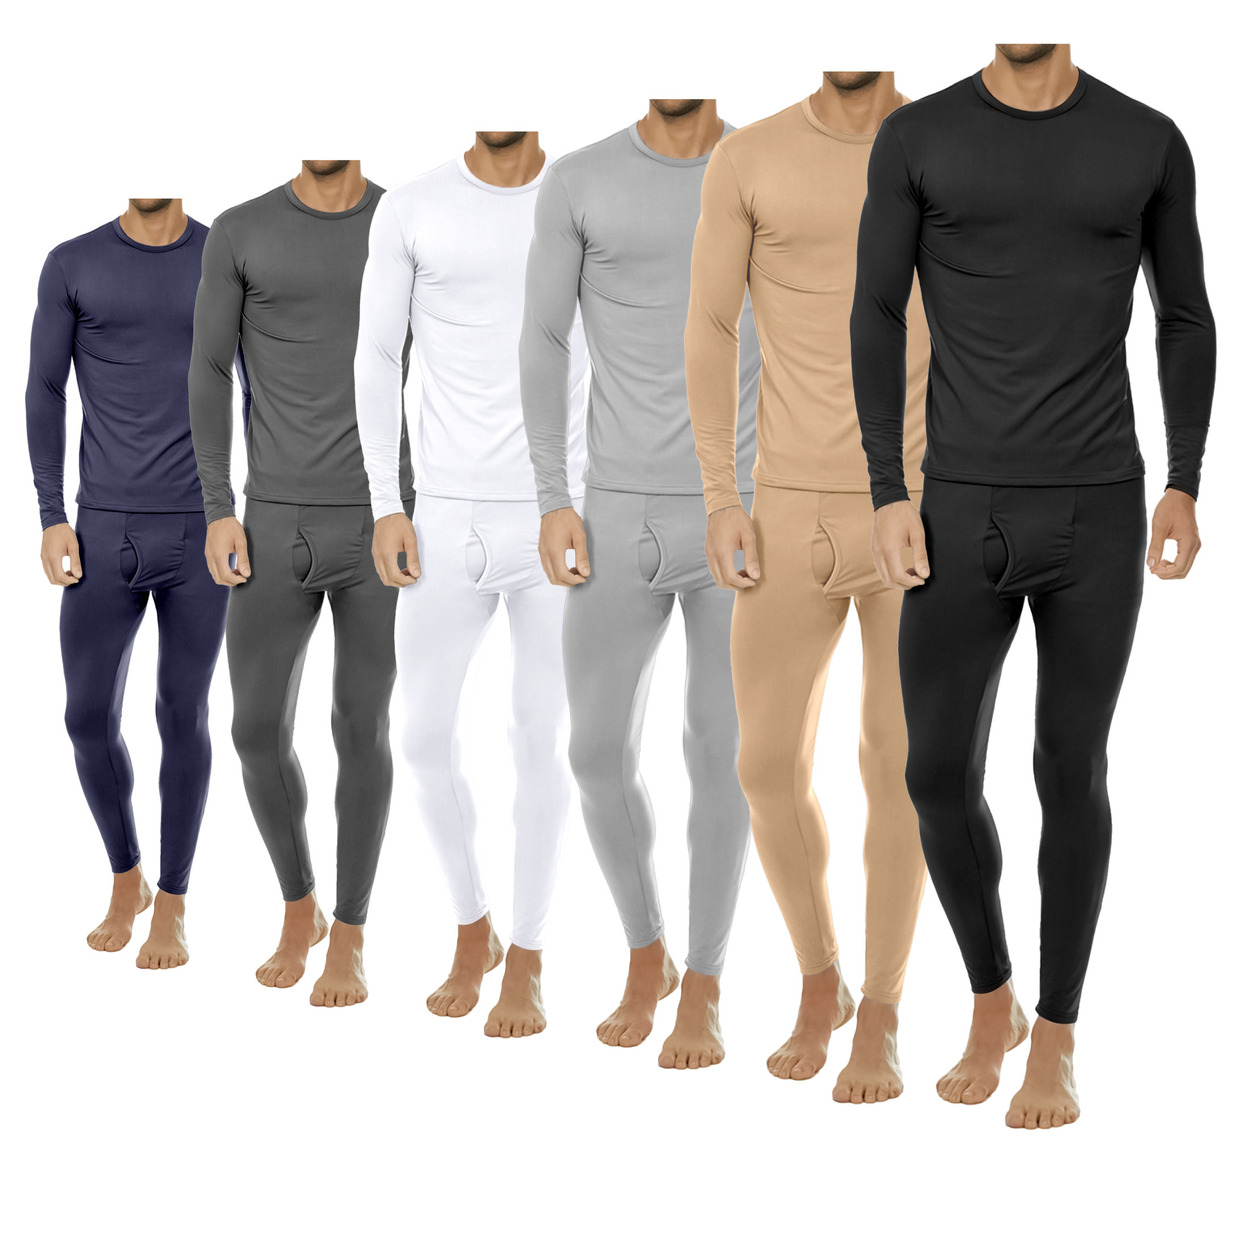 2-Pieces: Men's Winter Warm Fleece Lined Thermal Underwear Set For Cold Weather - Grey, Medium